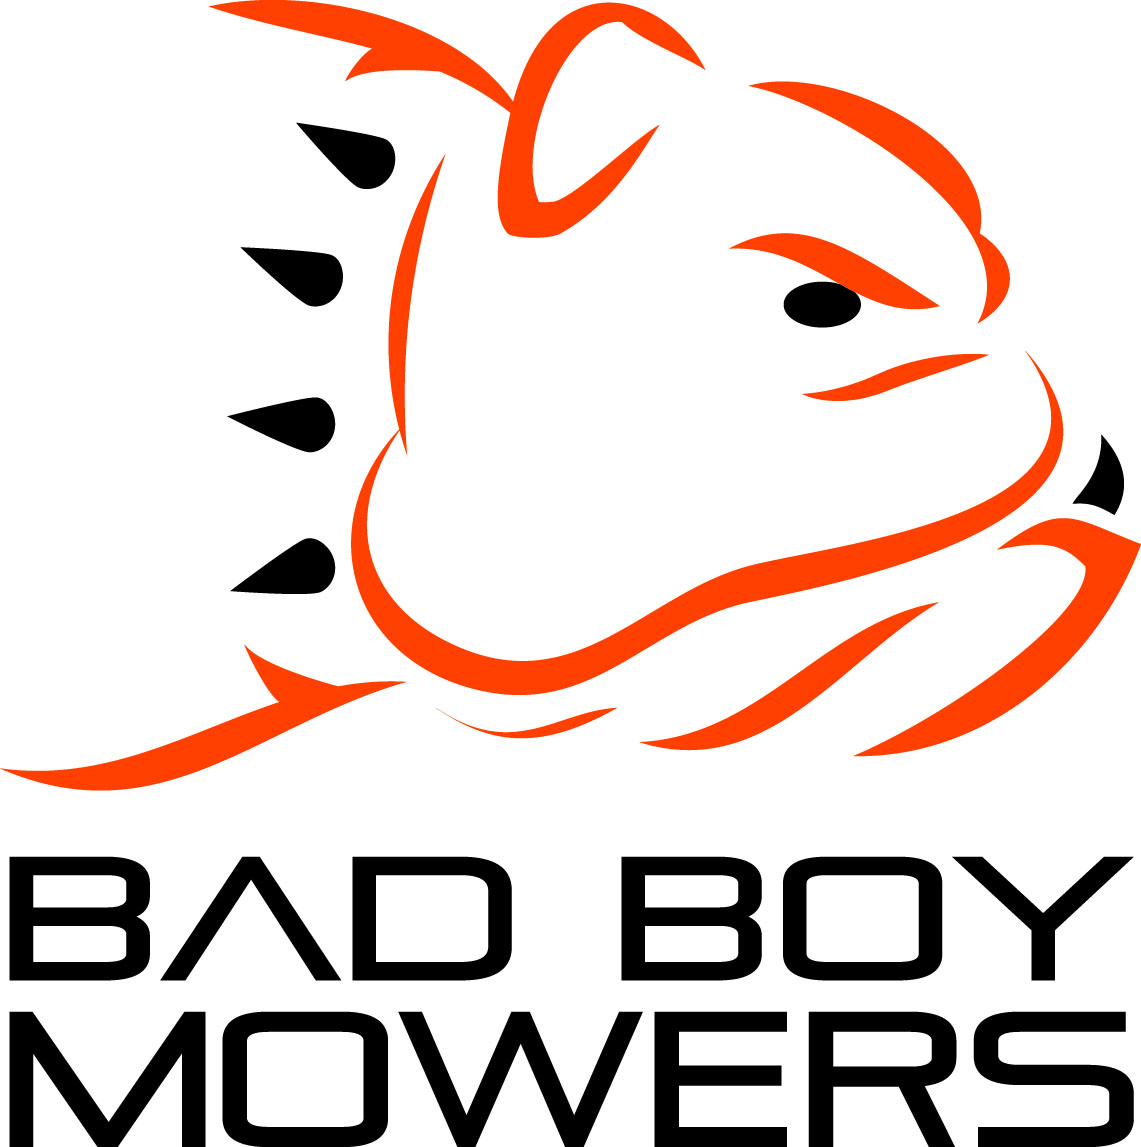 Bad Boy Mowers Logo